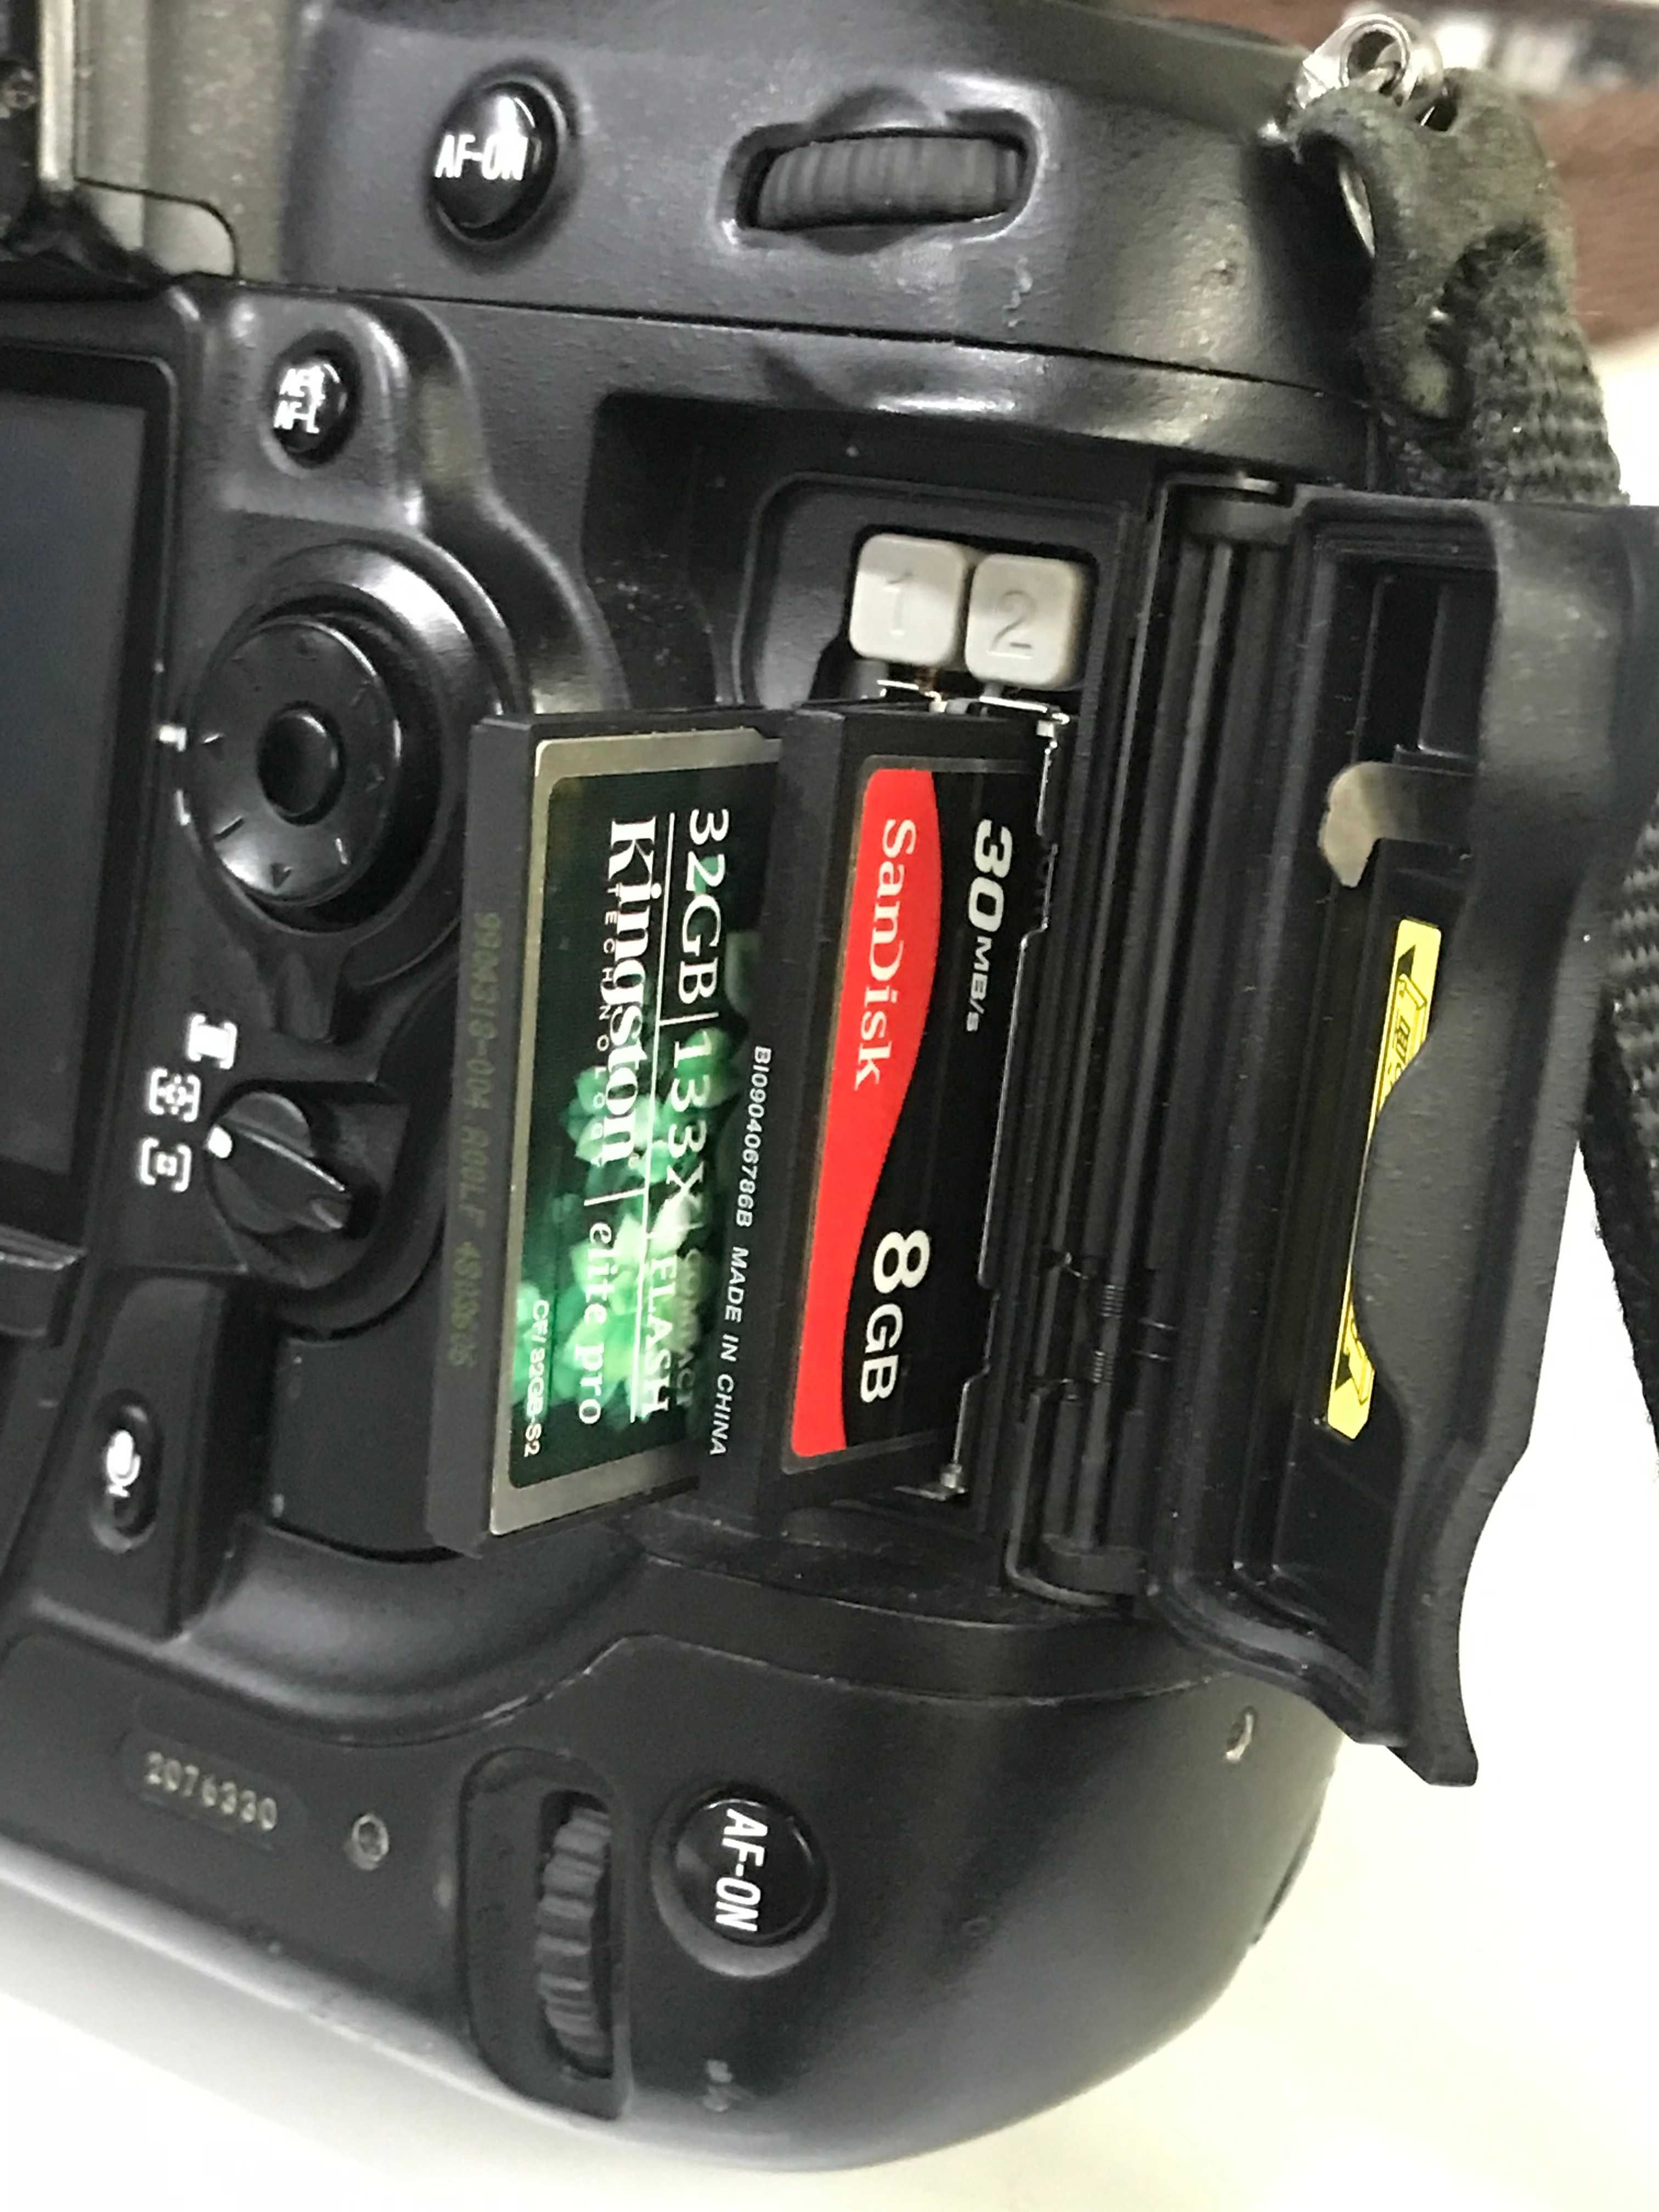 Nikon D3 с две карти и обектив Nikor 24-120мм 1:3,5-5,6 G.